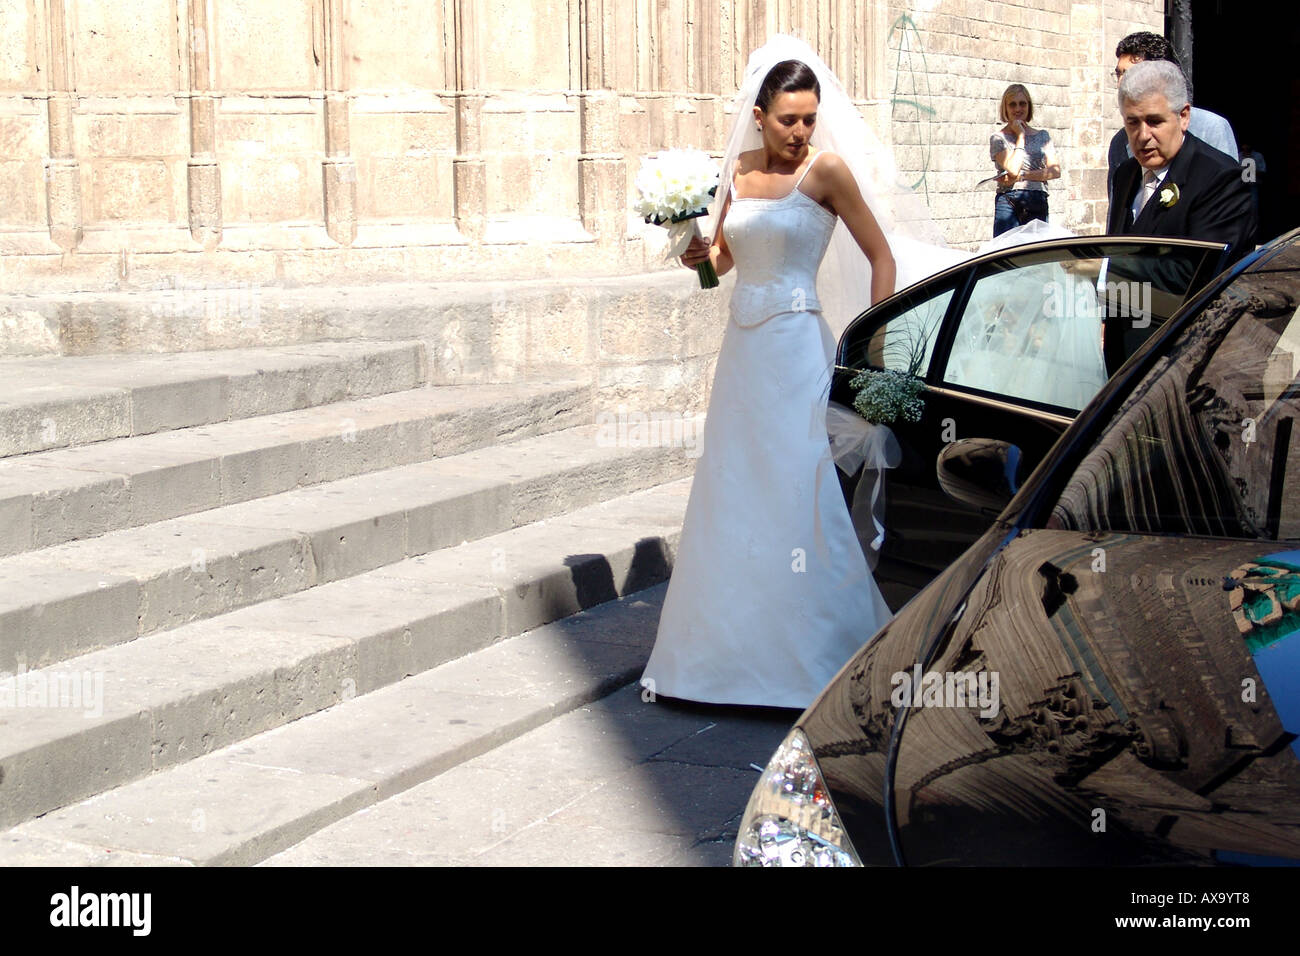 Wedding barcelona fotografías e imágenes de alta resolución - Alamy